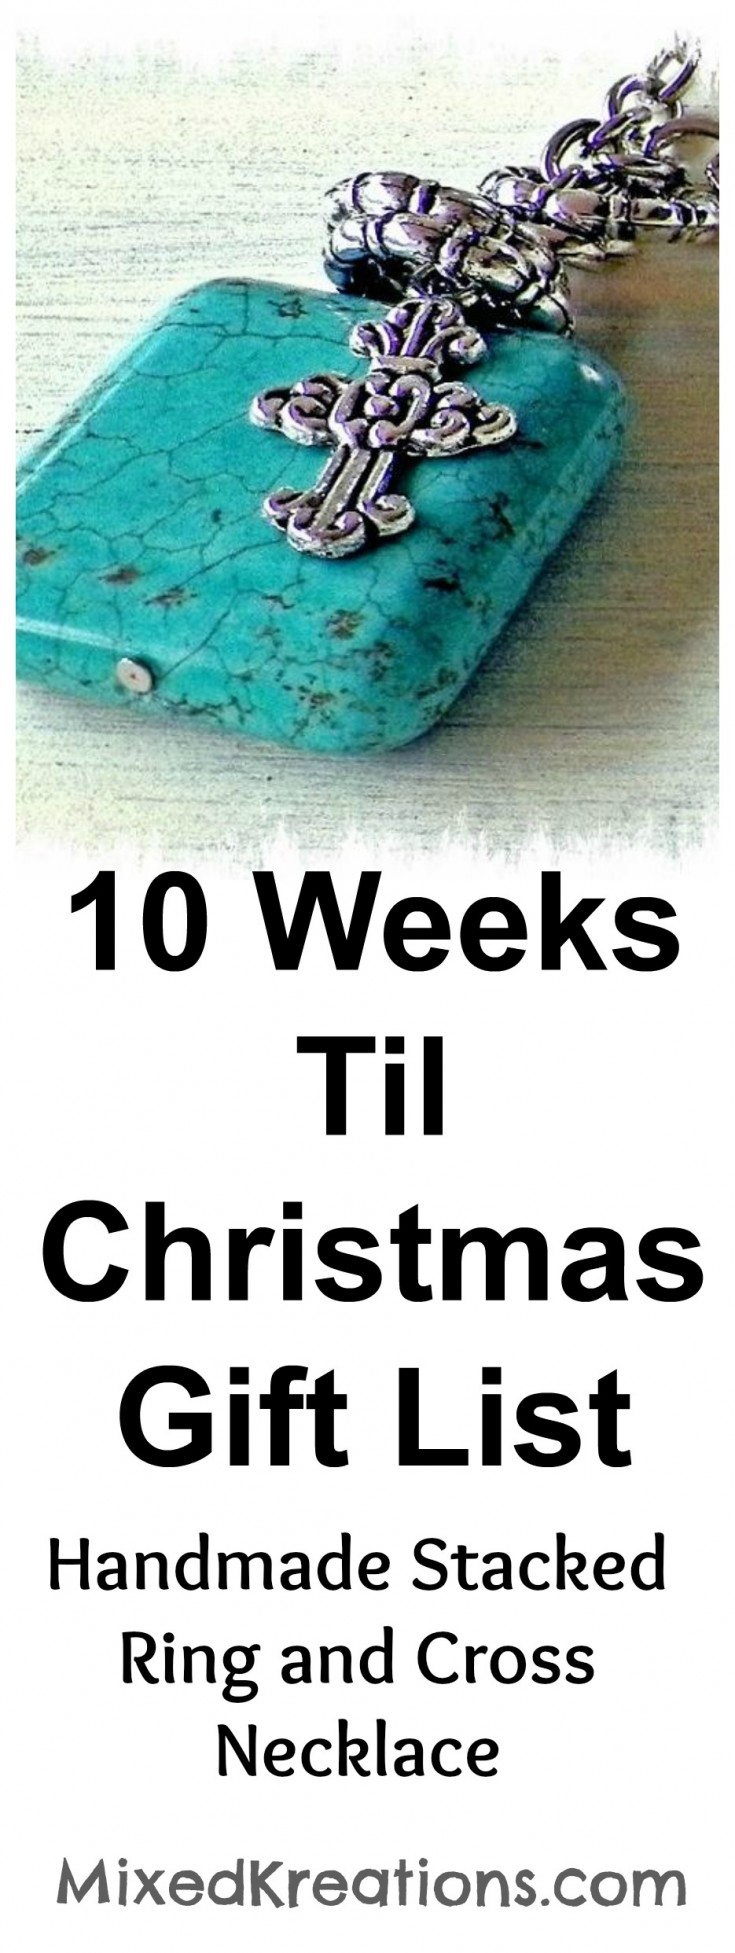 10 weeks til Christmas Gift List